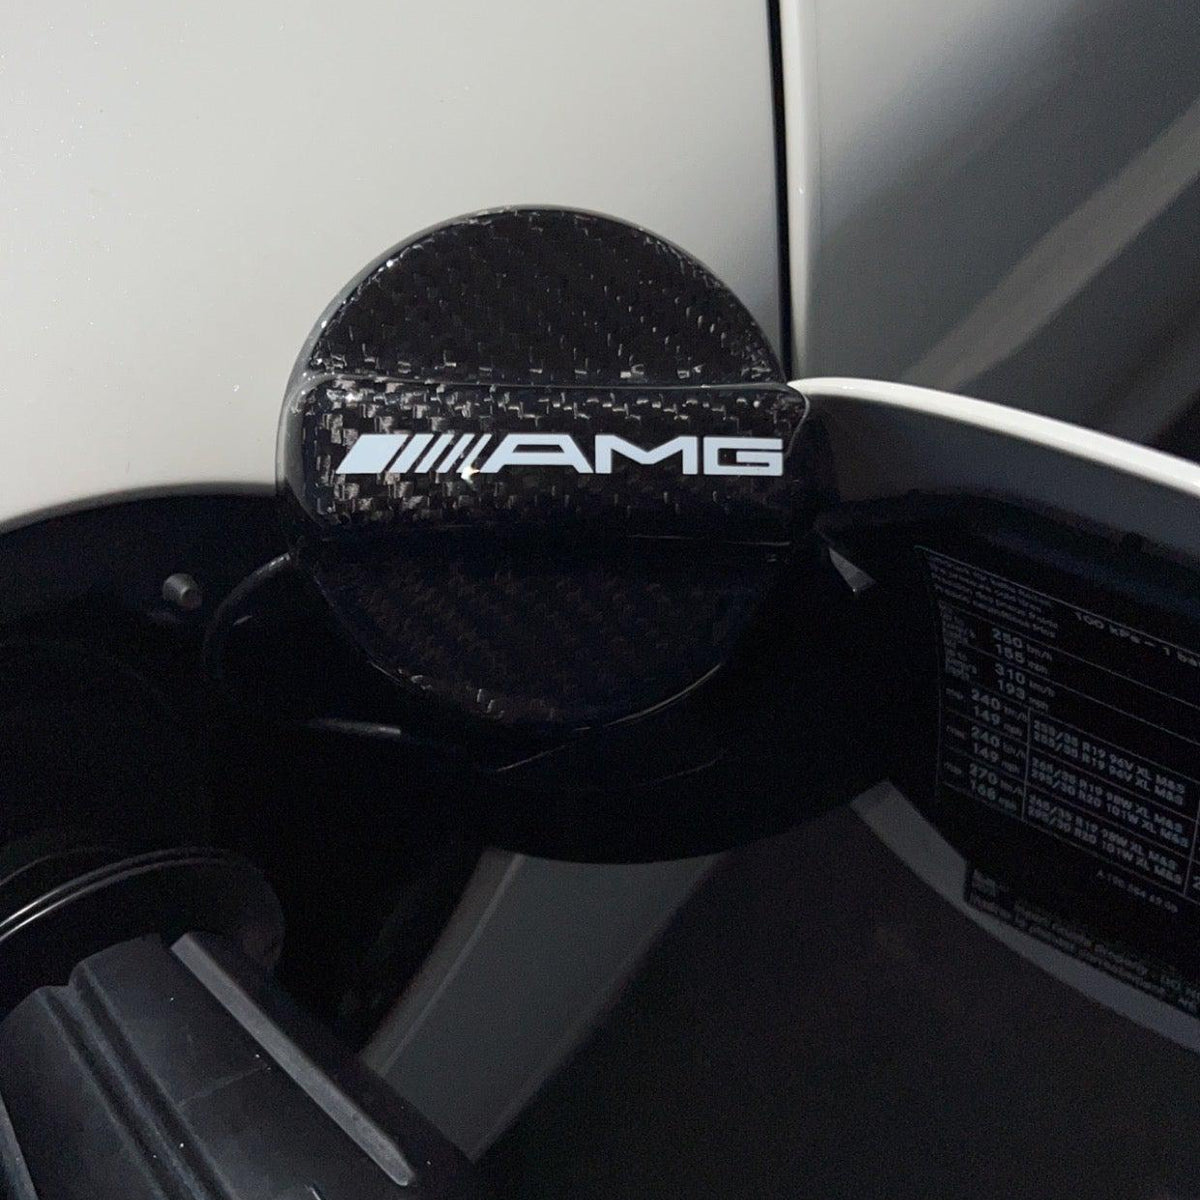 C-Klasse AMG Carbon Spiegelkappen Satz 206 Original Mercedes-AMG  A0998105903 A0998106003